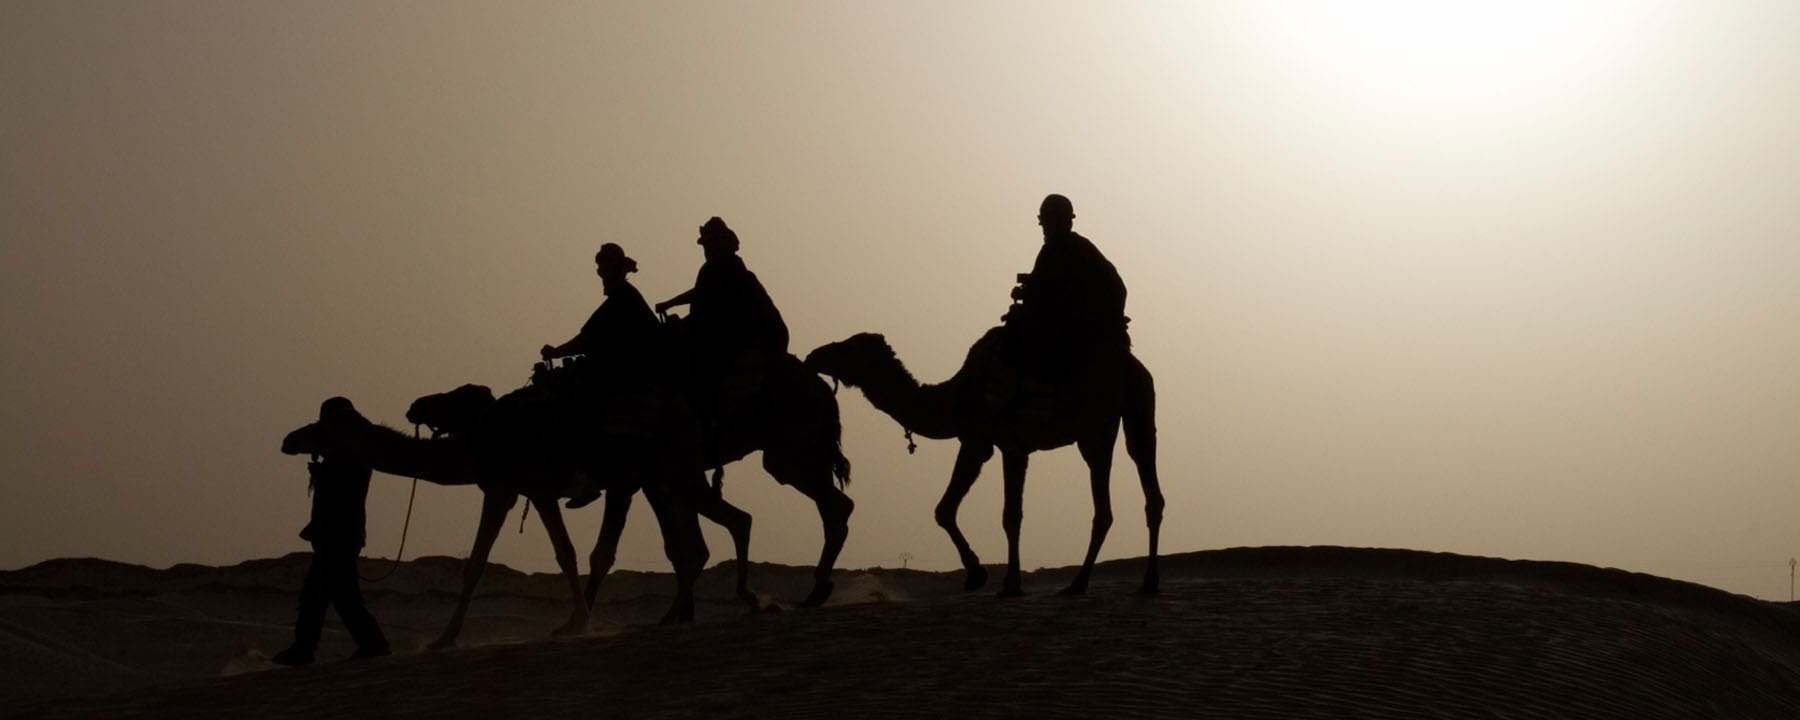 Camel Caravan Sahara desert Morocco_Source iStock